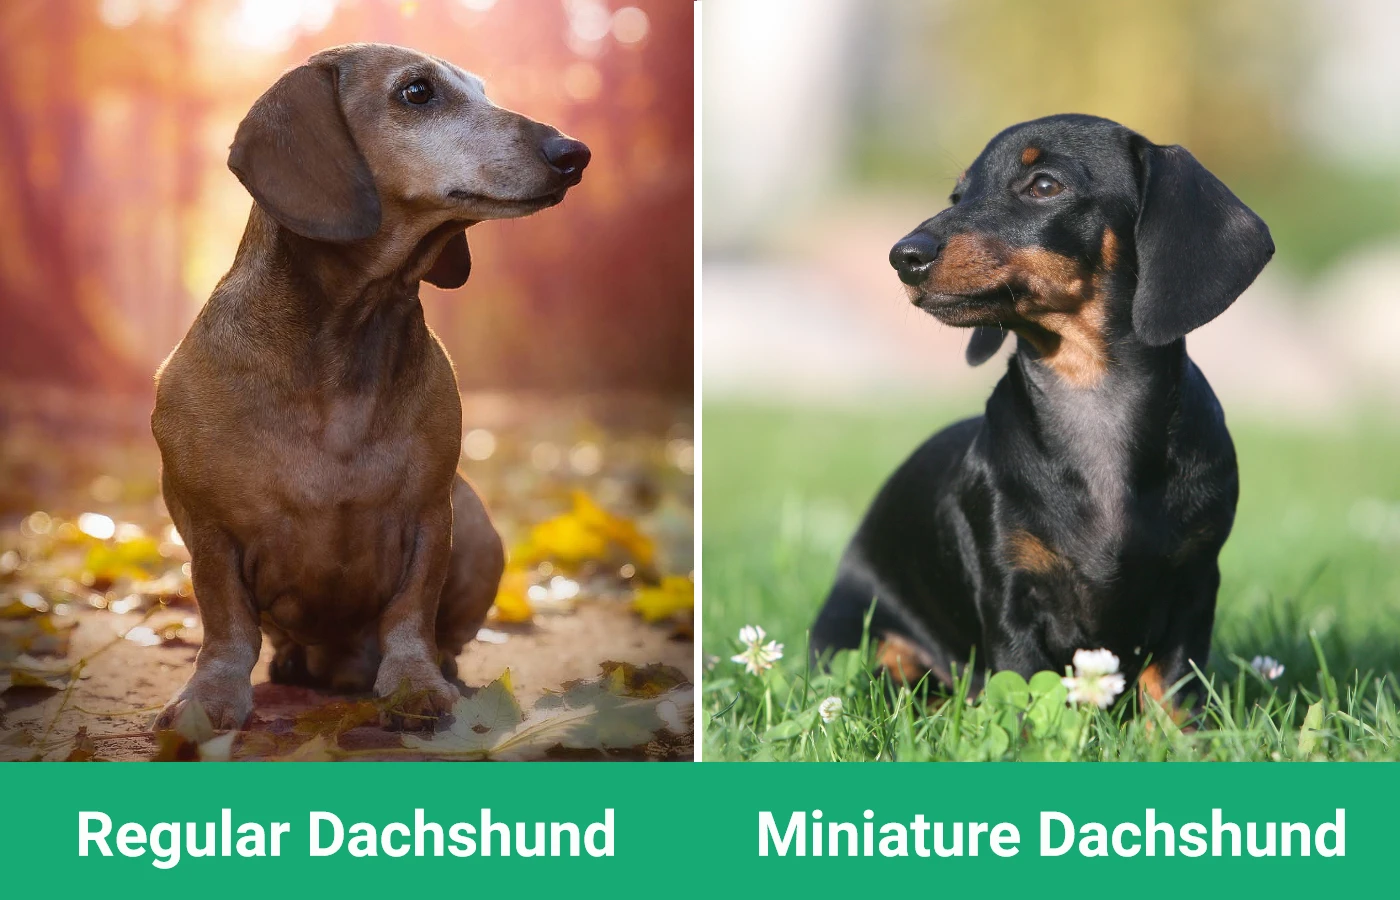 Regular Dachshund vs Miniature Dachshund - Visual Comparison